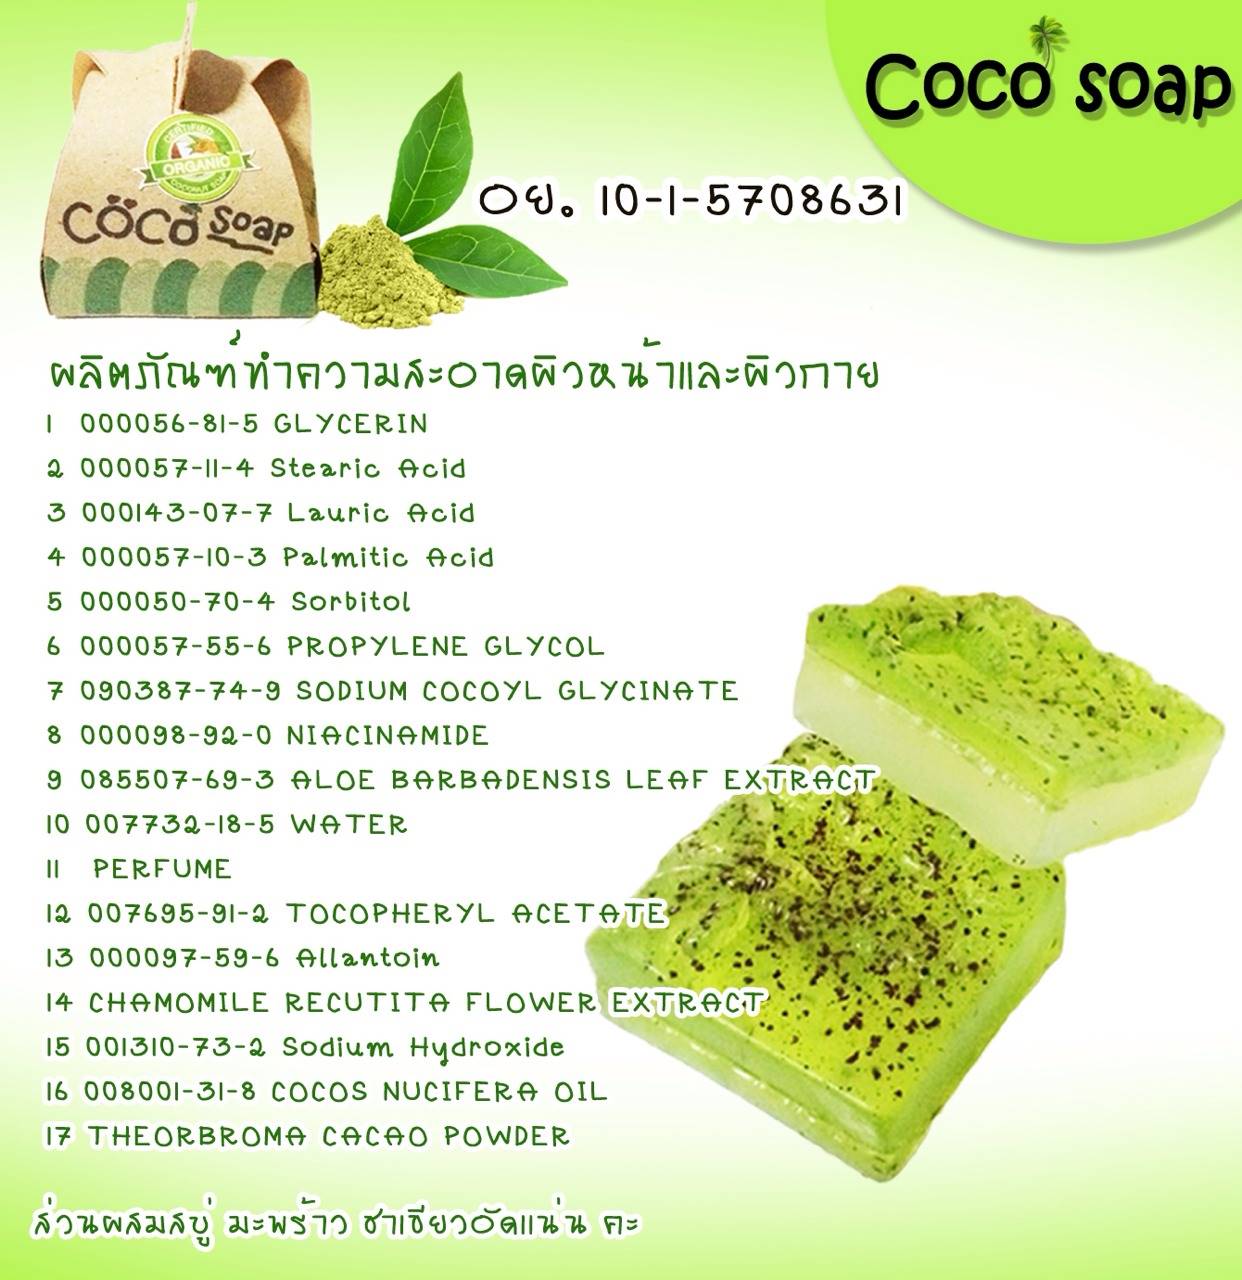 CoCo Soap Plus green tea, CoCo Soap green tea, coco soap, สบู่มะพร้าว coco soap, สบู่มะพร้าวชาเขียว, สบู่มะพร้าว, สบู่มะพร้าว สรรพคุณ, สบู่ไข่ขาวสวีเดน, สบู่ล้างหน้า, สบู่ล้างหน้าที่ดีที่สุด, สบู่ล้างหน้า cetaphil, สบู่ล้างหน้า acne aid, สบู่ล้างหน้า สิว, สบู่ wink white รีวิว, สบู่ wink white ปลอม, สบู่ wink white ของปลอม, สบู่ชาเขียว pantip, สบู่ wink white แท้, สบู่ wink white ของแท้, สบู่เต้าหู้, สบู่ชาเขียว, สบู่ชาเขียวญี่ปุ่น, สบู่แครอท, สบู่เบนเนท, สบู่ มาดามเฮง,